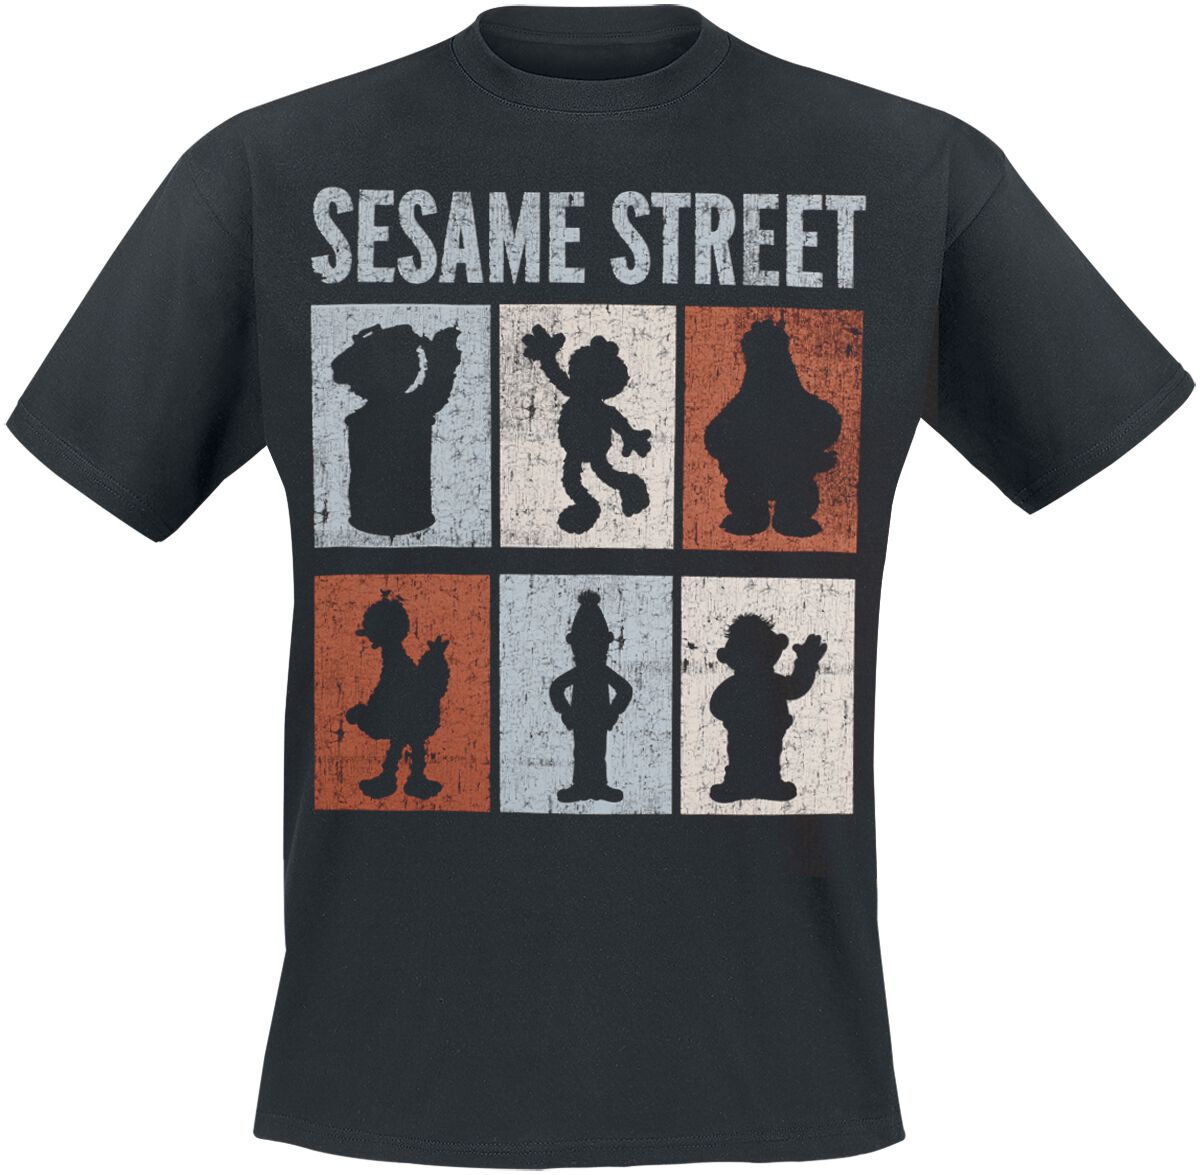 Image of T-Shirt di Sesame Street - Sesame Street - Street characters - M a 3XL - Uomo - nero